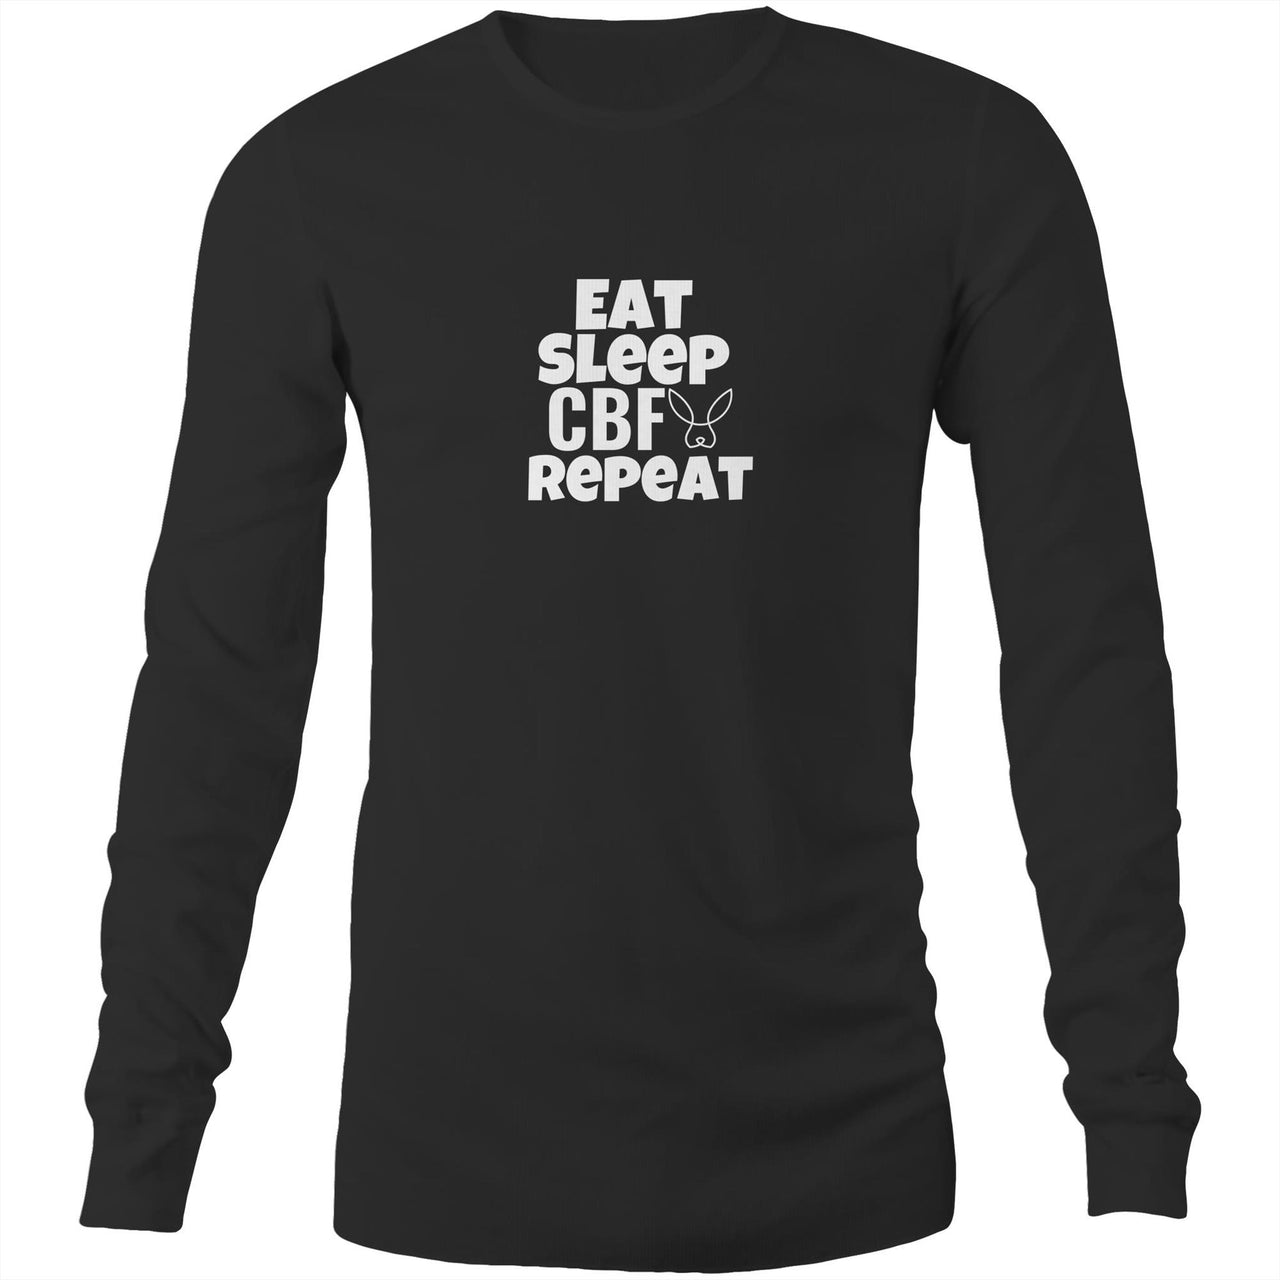 Eat Sleep CBF Repeat Long Sleeve T-Shirt Black by CBF Clothing